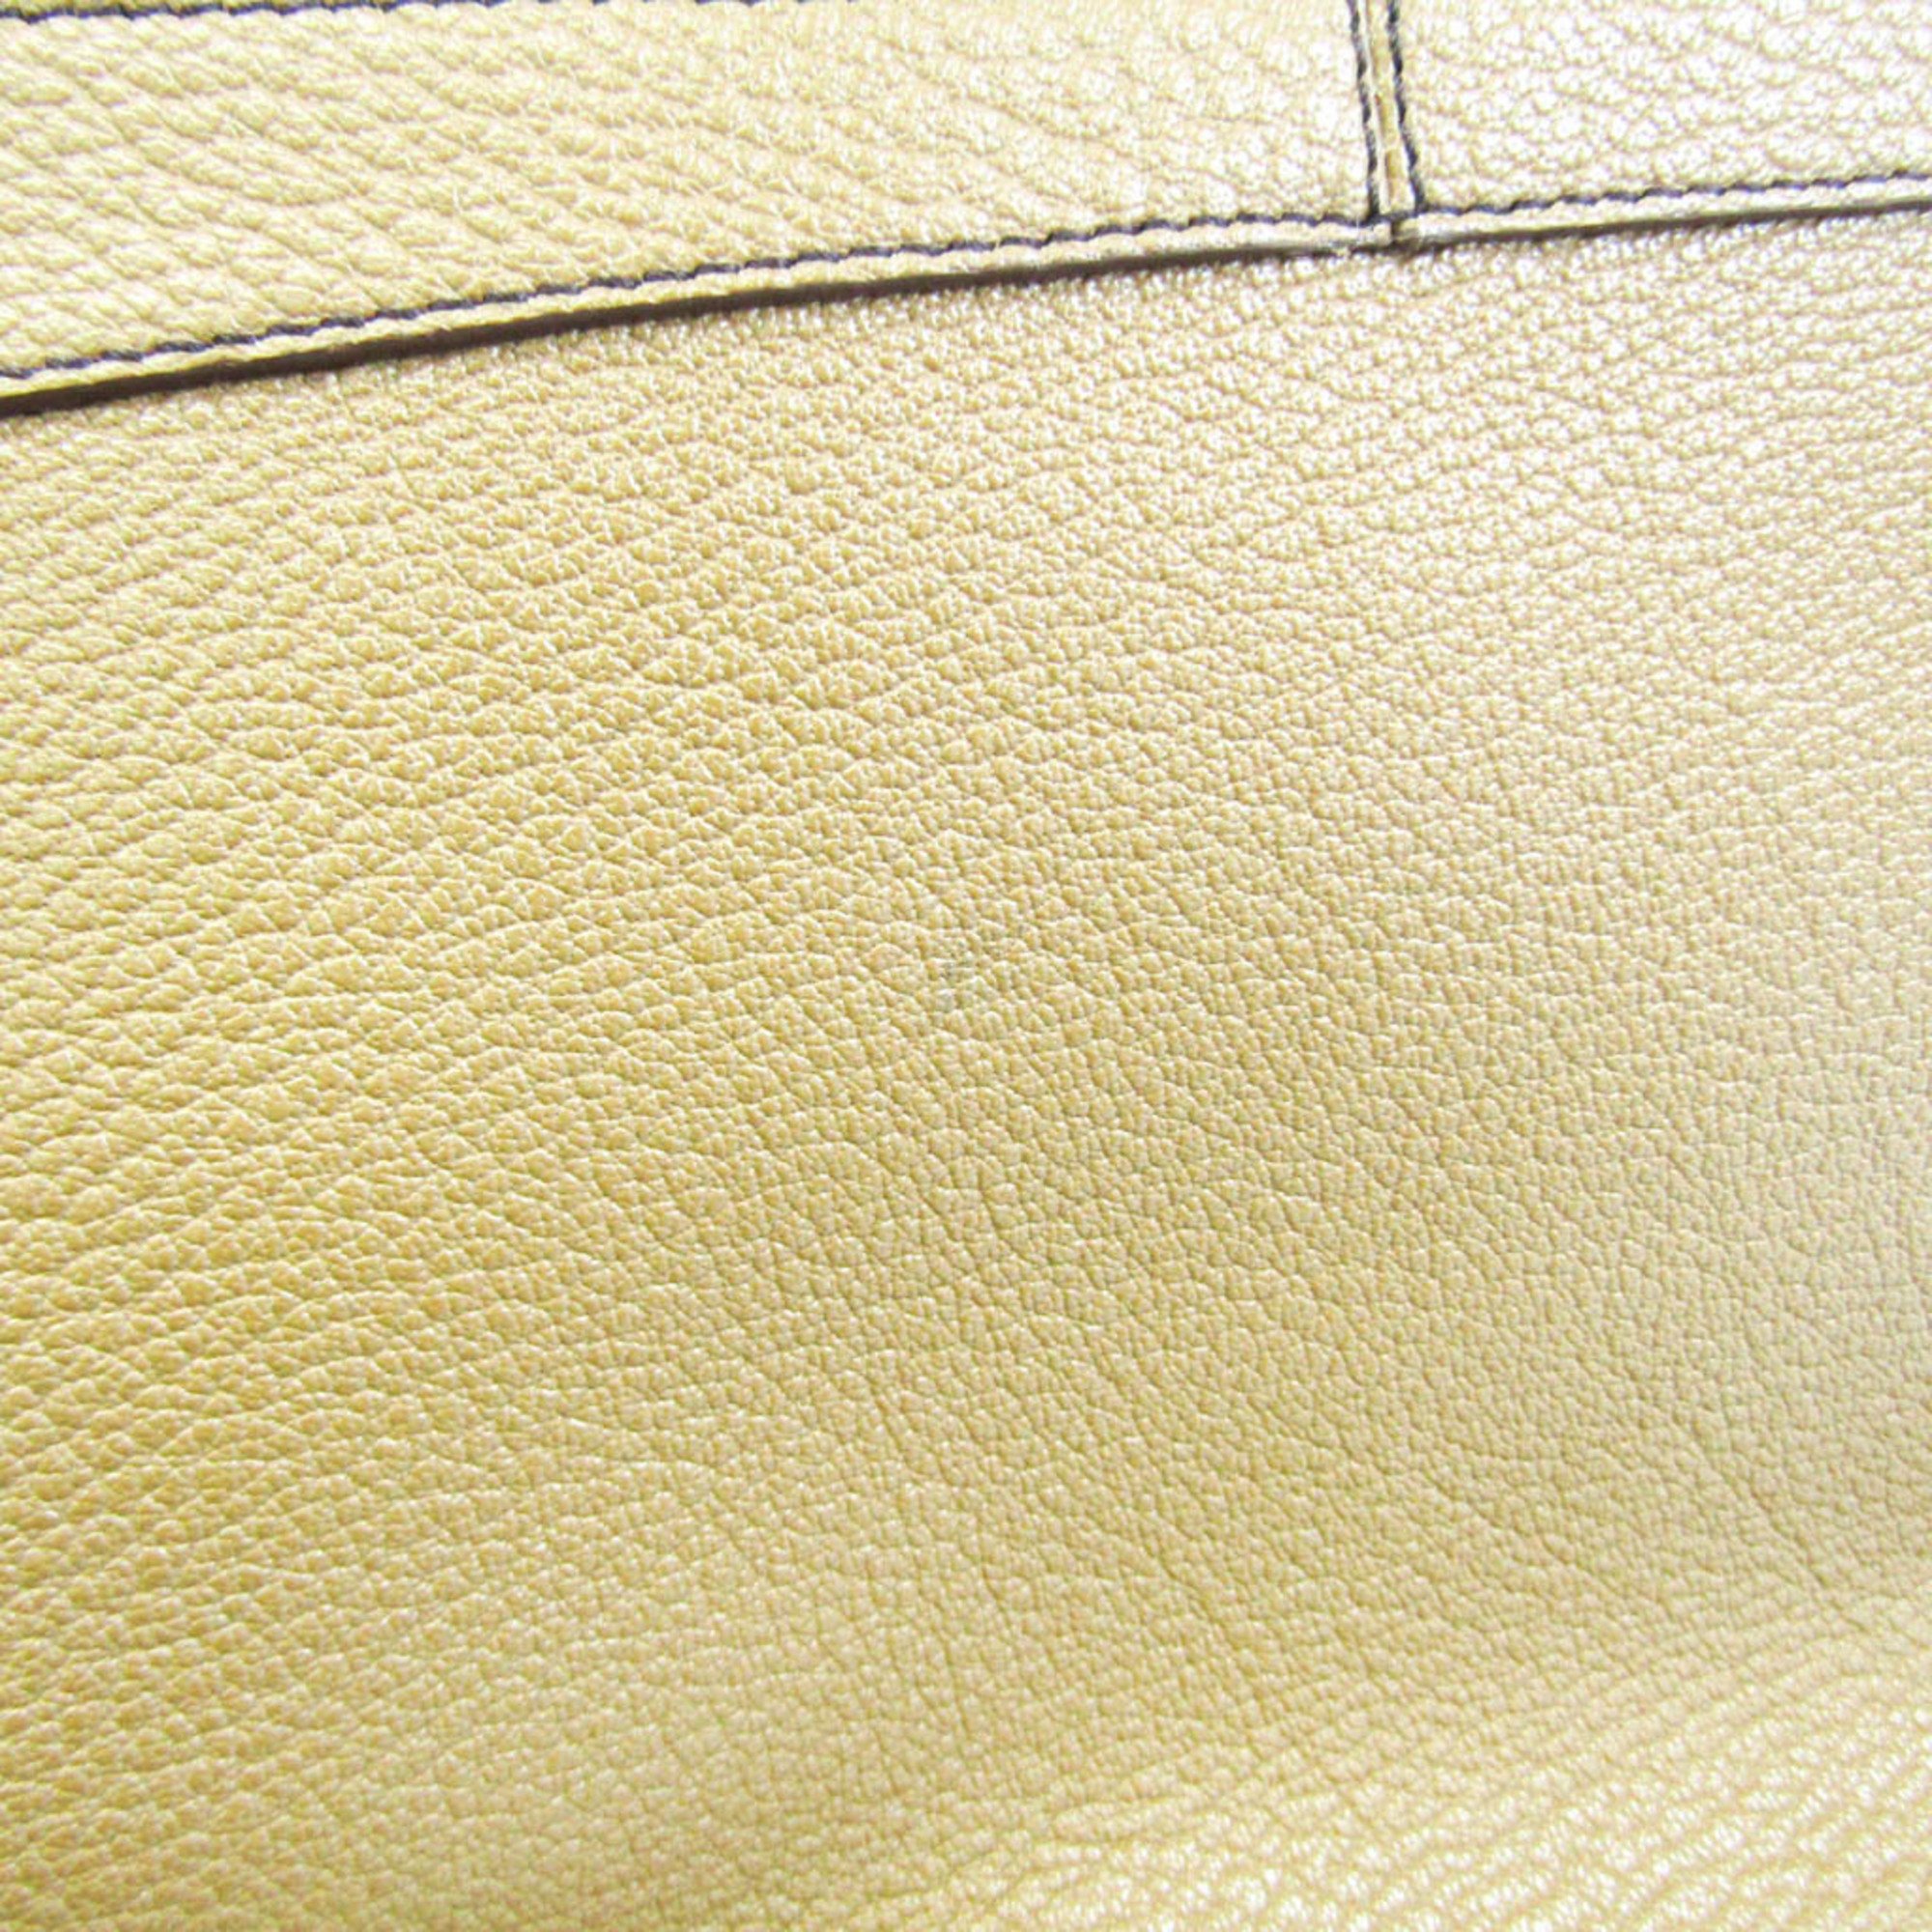 Bvlgari B.zero1 Women's Leather Shoulder Bag Light Brown